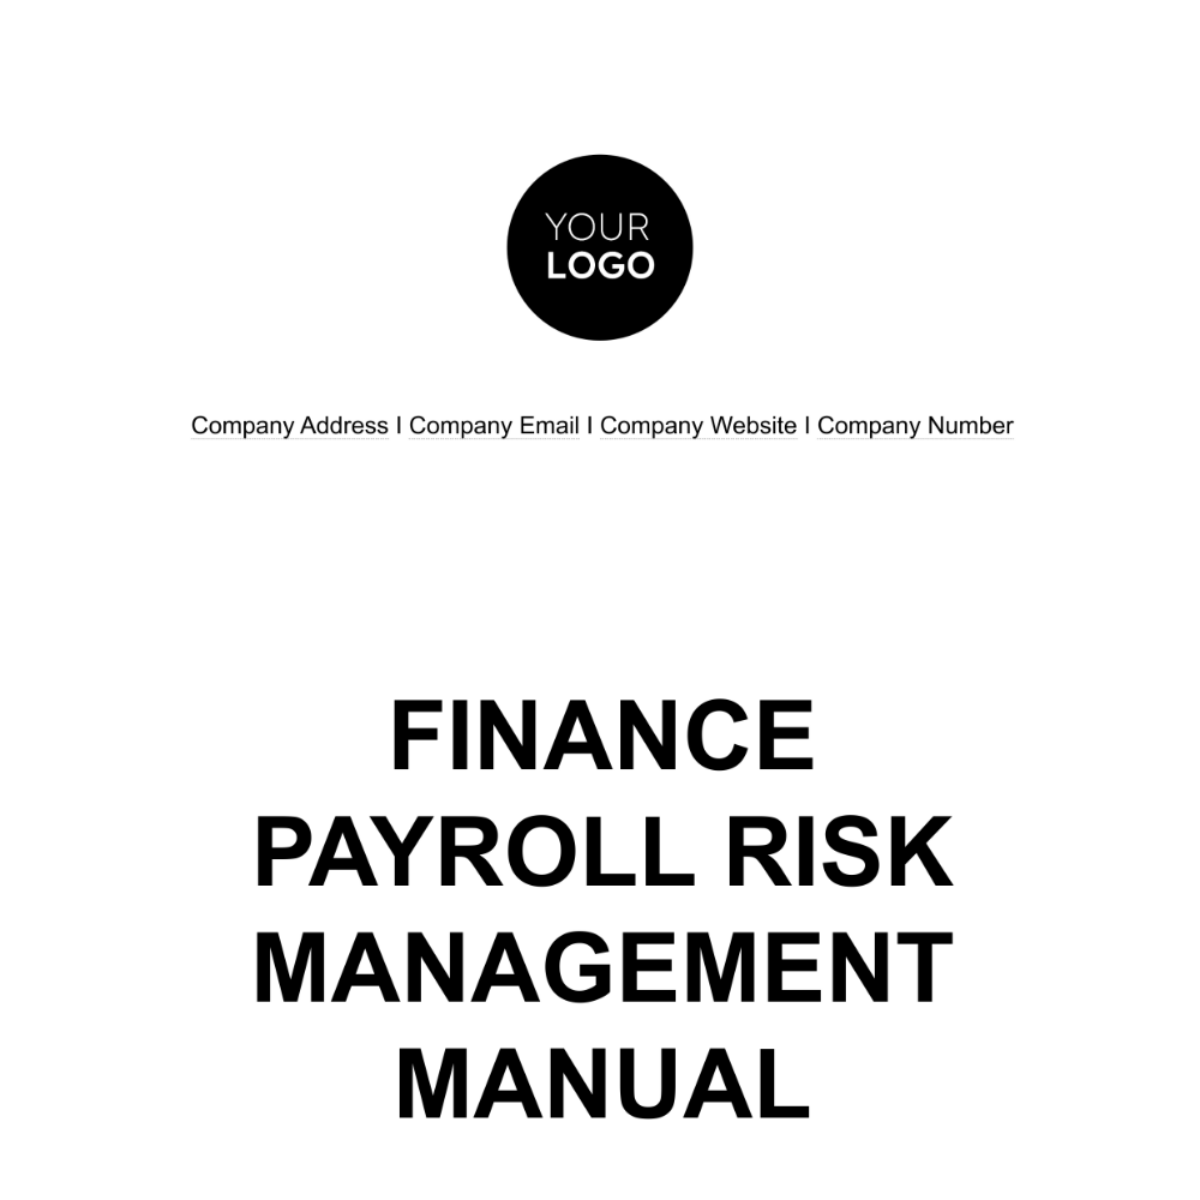 Finance Payroll Risk Management Manual Template